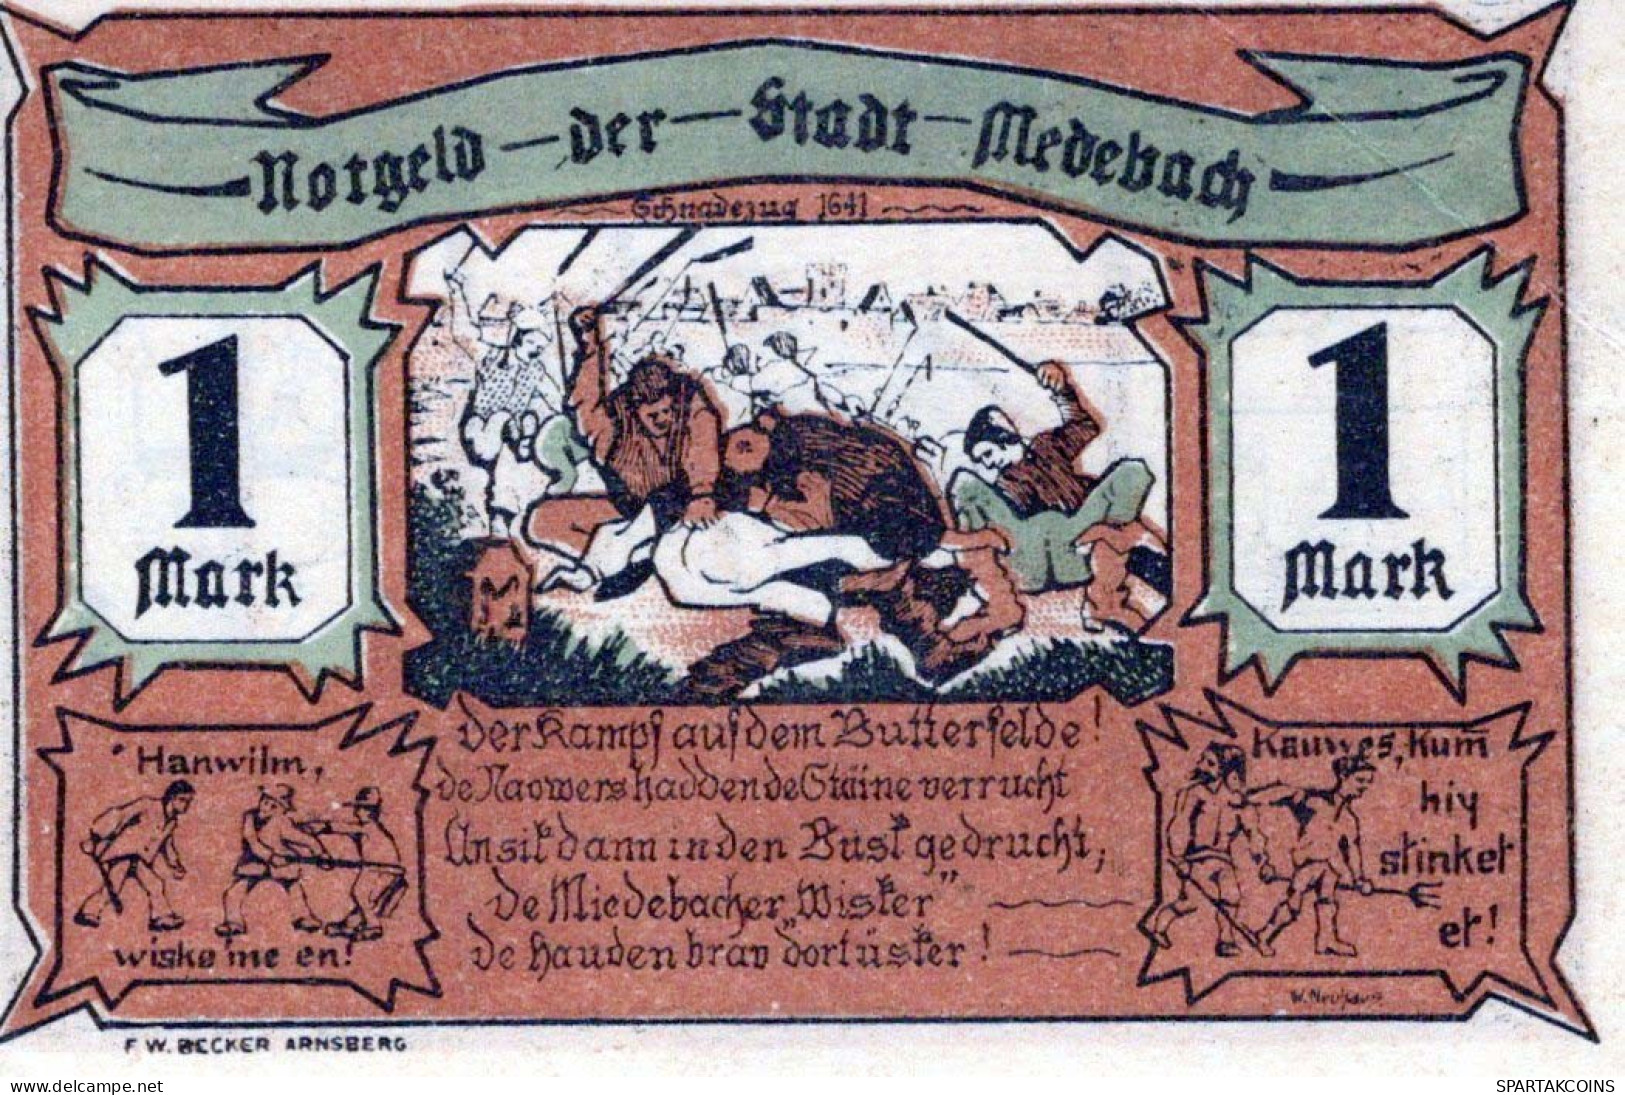 1 MARK Stadt MEDEBACH Westphalia DEUTSCHLAND Notgeld Papiergeld Banknote #PJ095 - [11] Local Banknote Issues